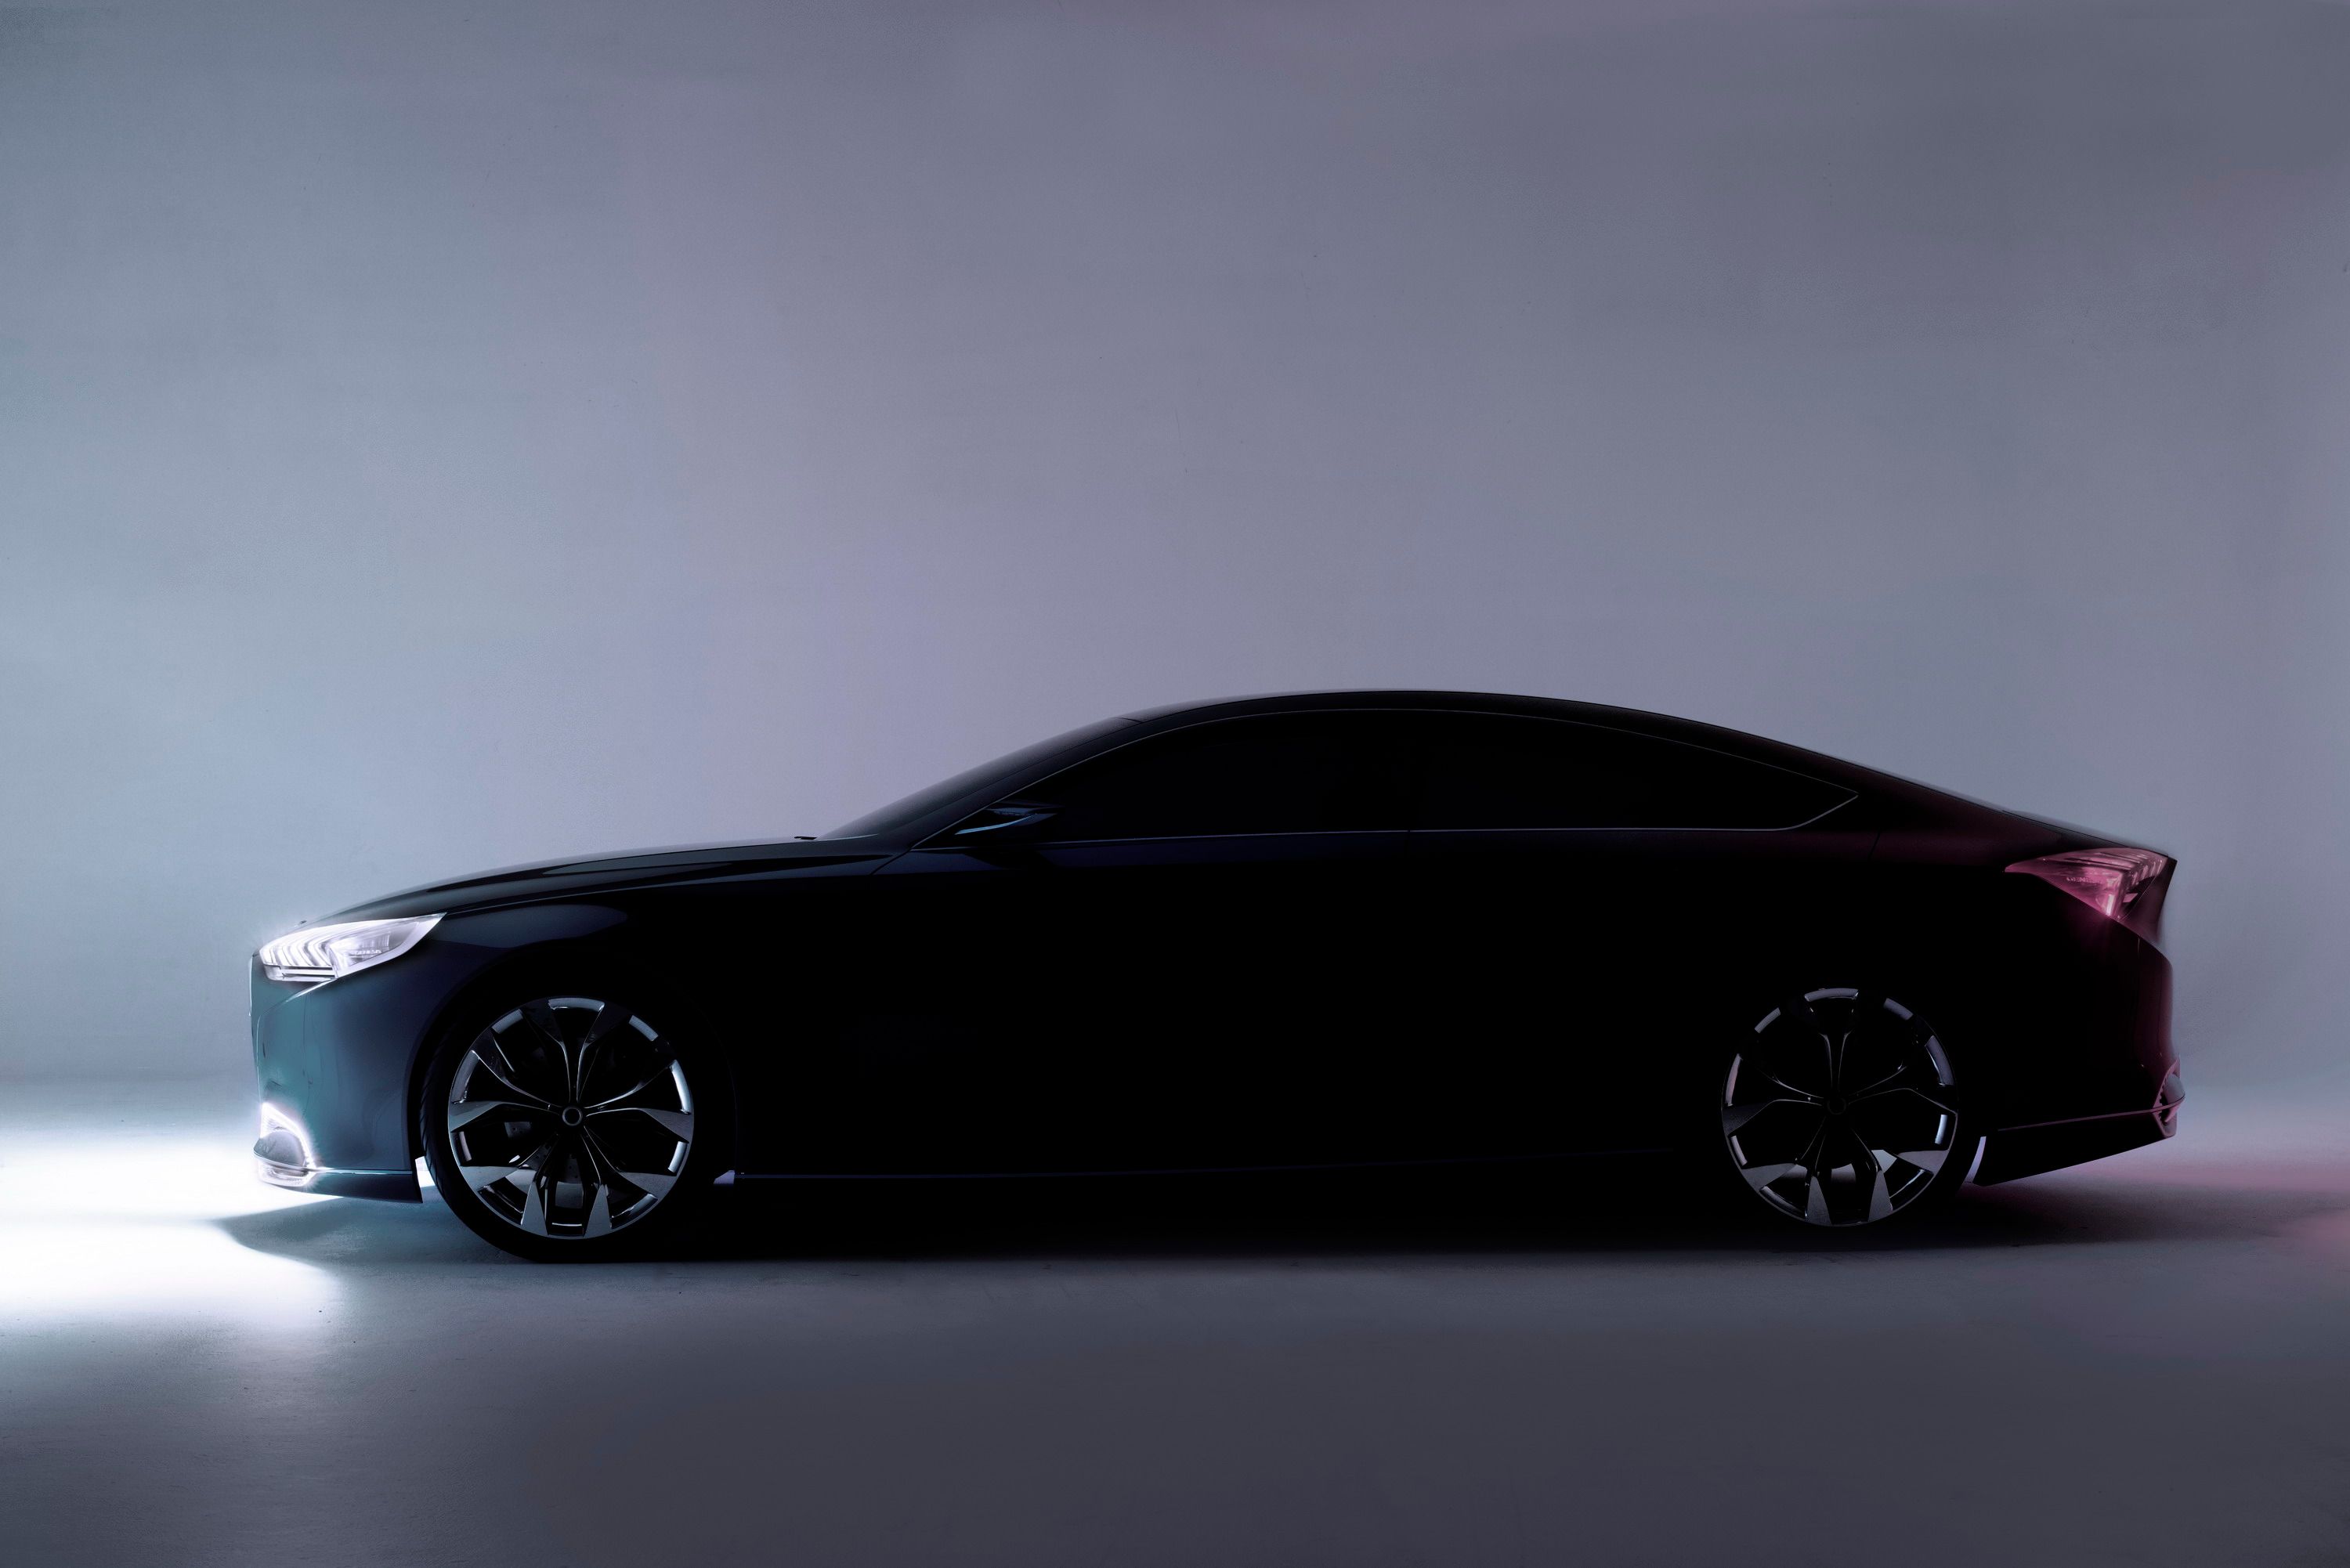 2013 Hyundai HCD-14 Genesis Concept